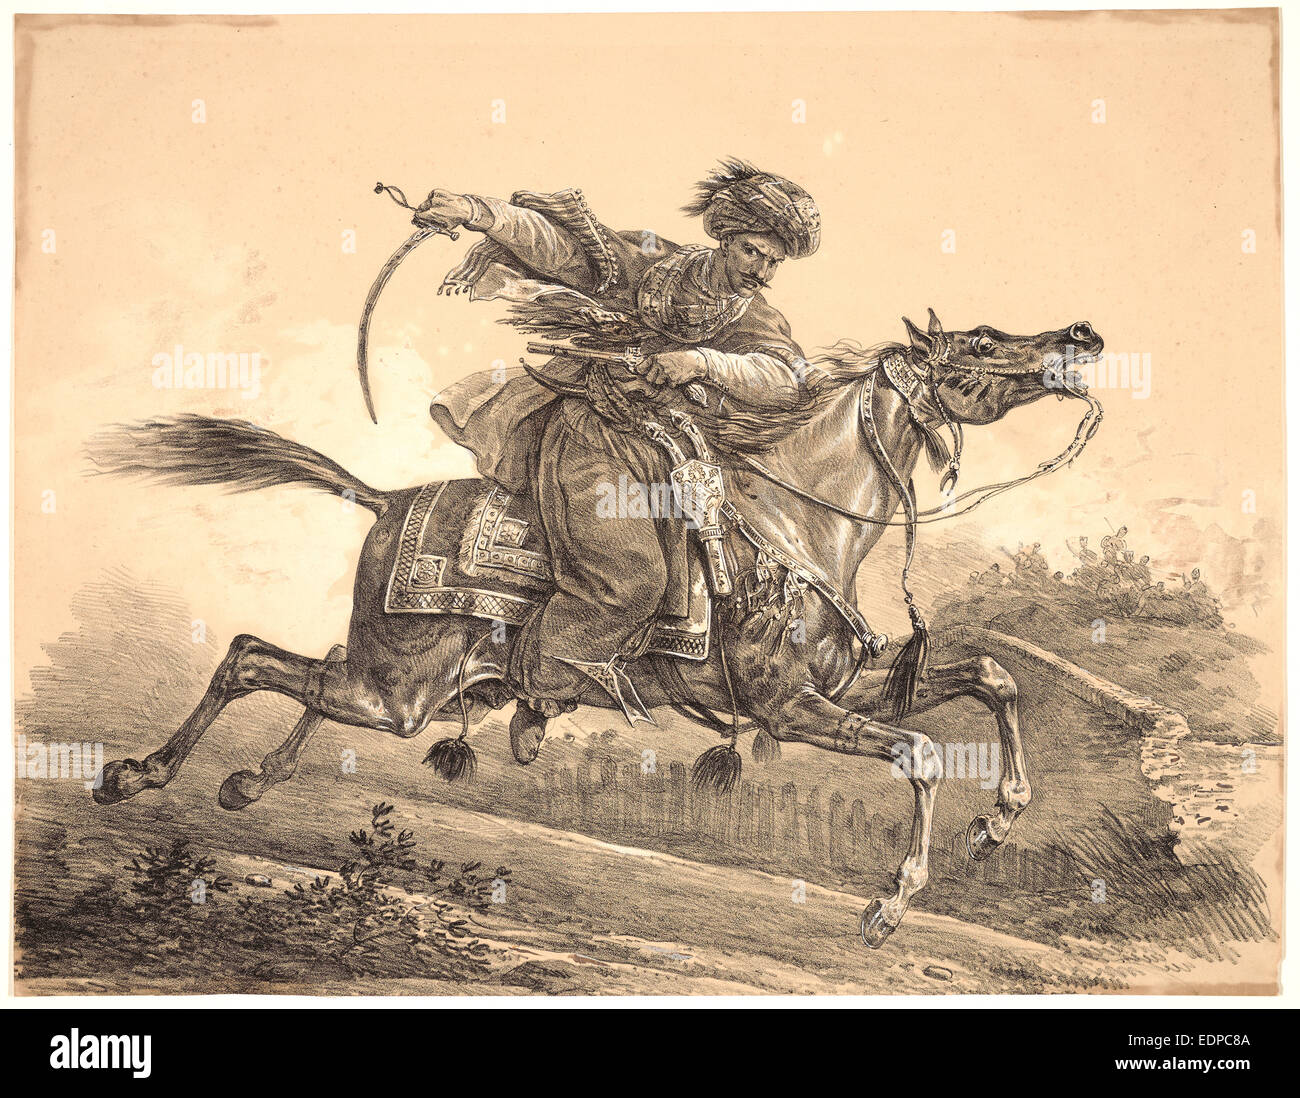 Carle Vernet (aka Antoine Charles Horace Vernet, Français, 1758 - 1836). Rider mahométane avec Sabre et pistolet Banque D'Images